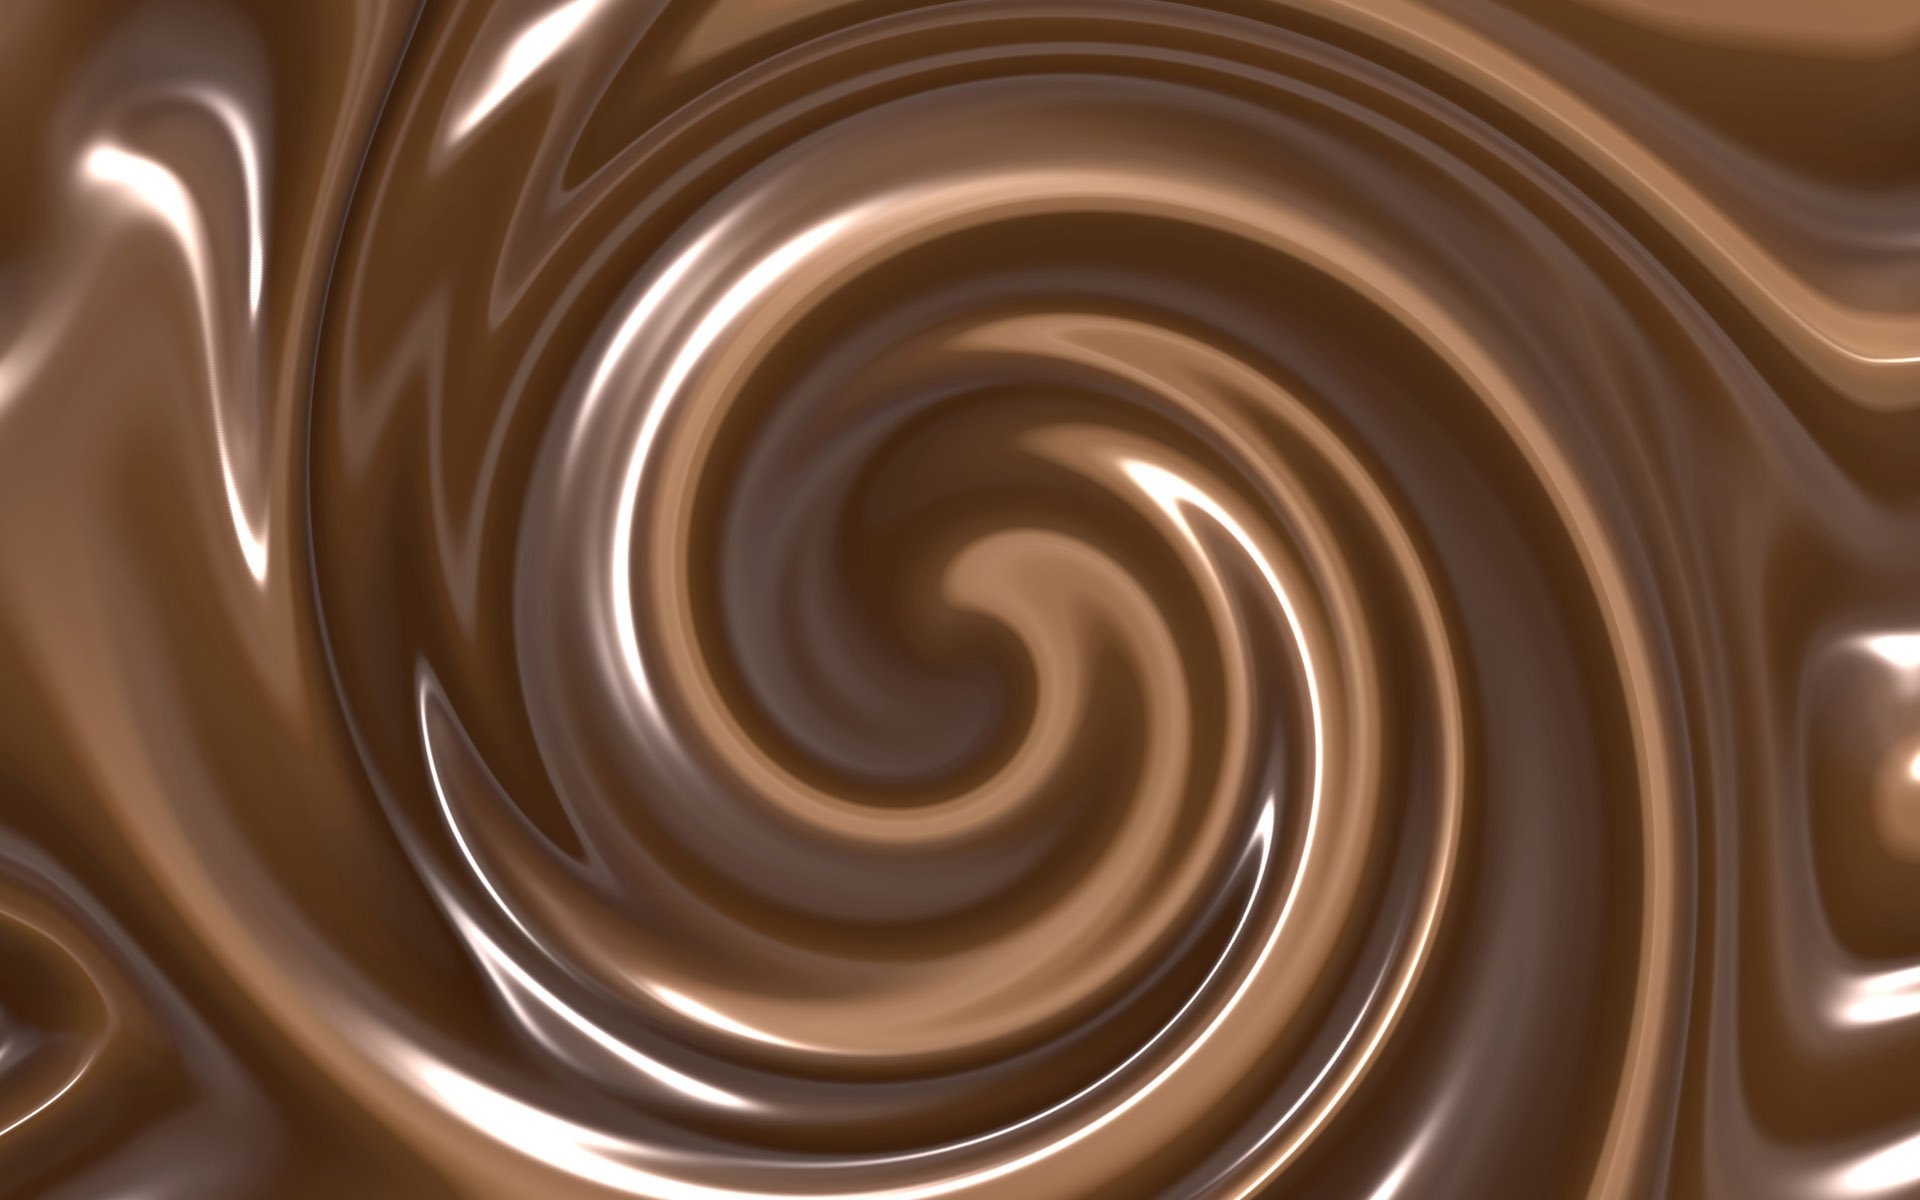 Swirl of Liquid Chocolate HD Wallpaper | Background Image | 1920x1200 | ID:269703 - Wallpaper Abyss